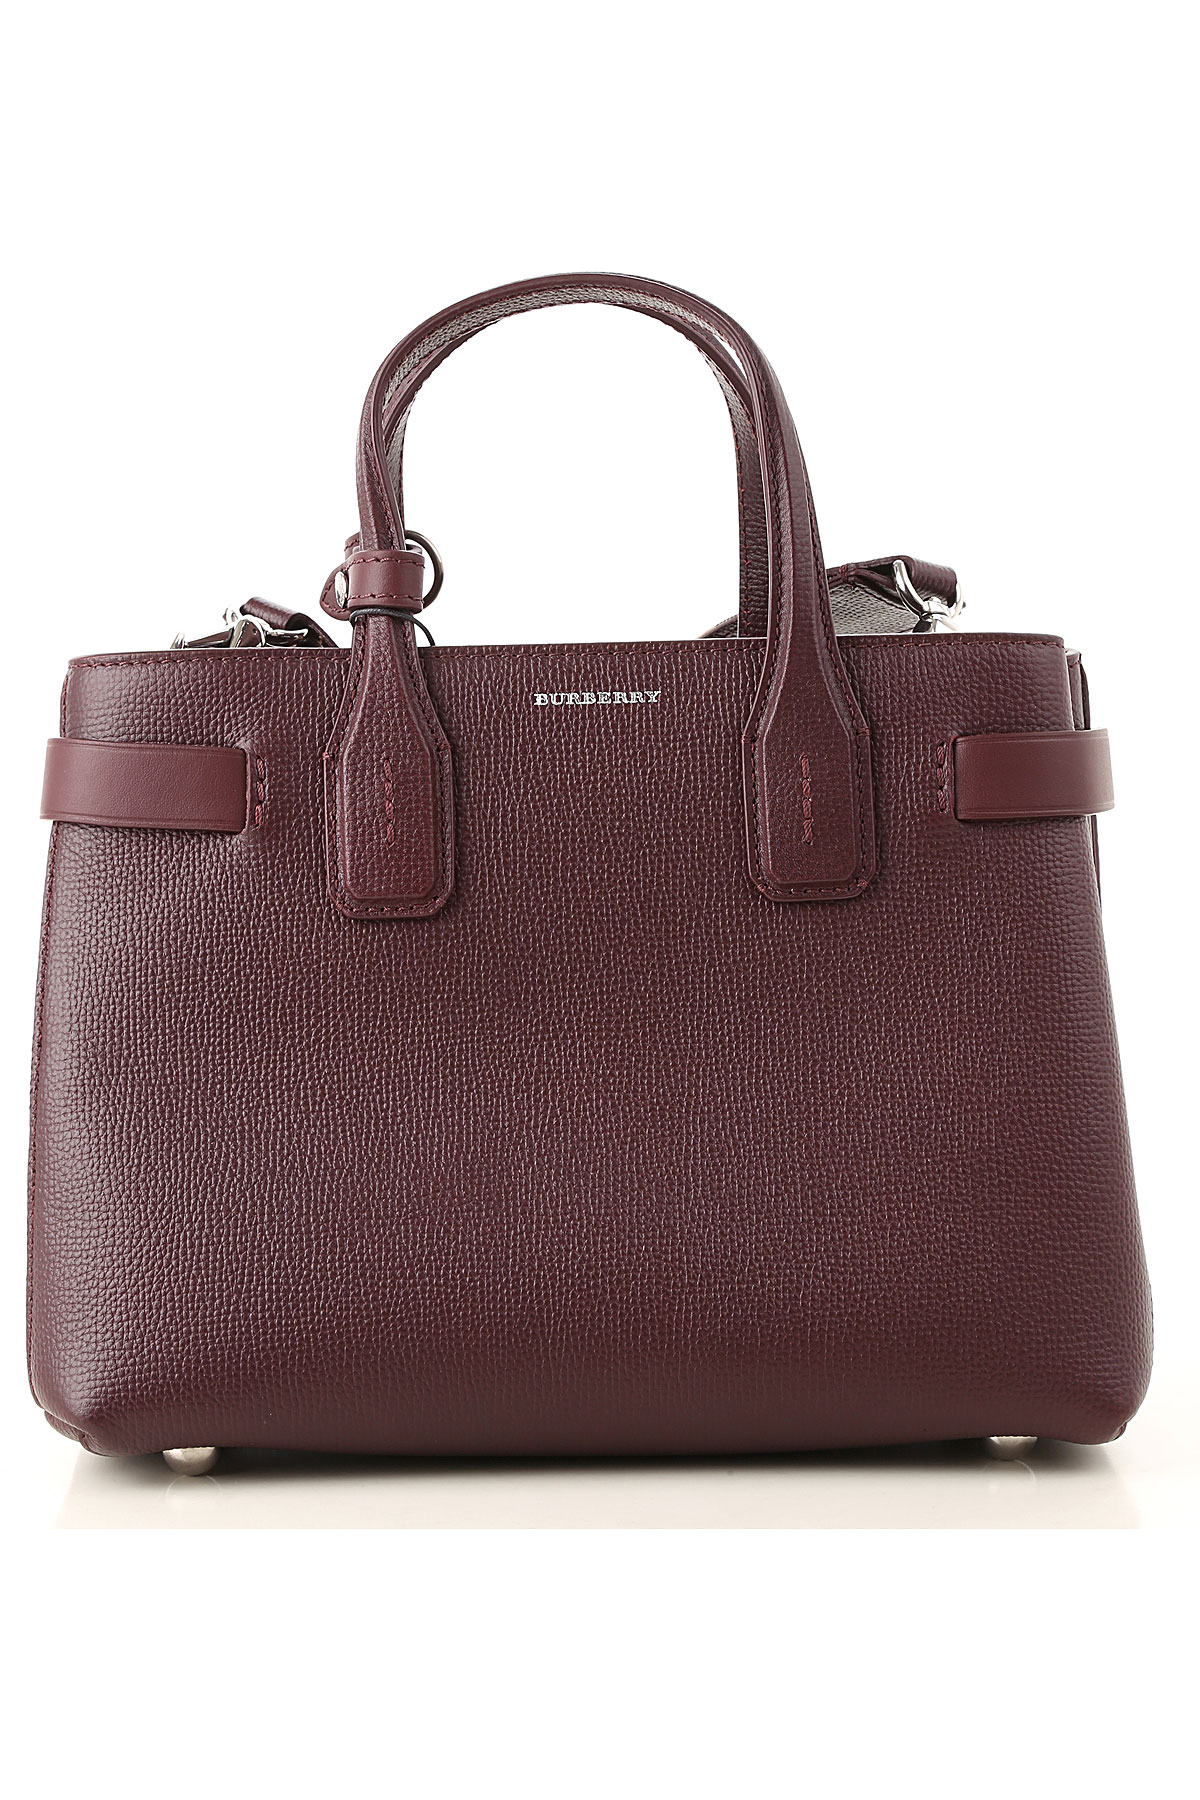 Handbags Burberry, Style code: 4076637-60640-B343